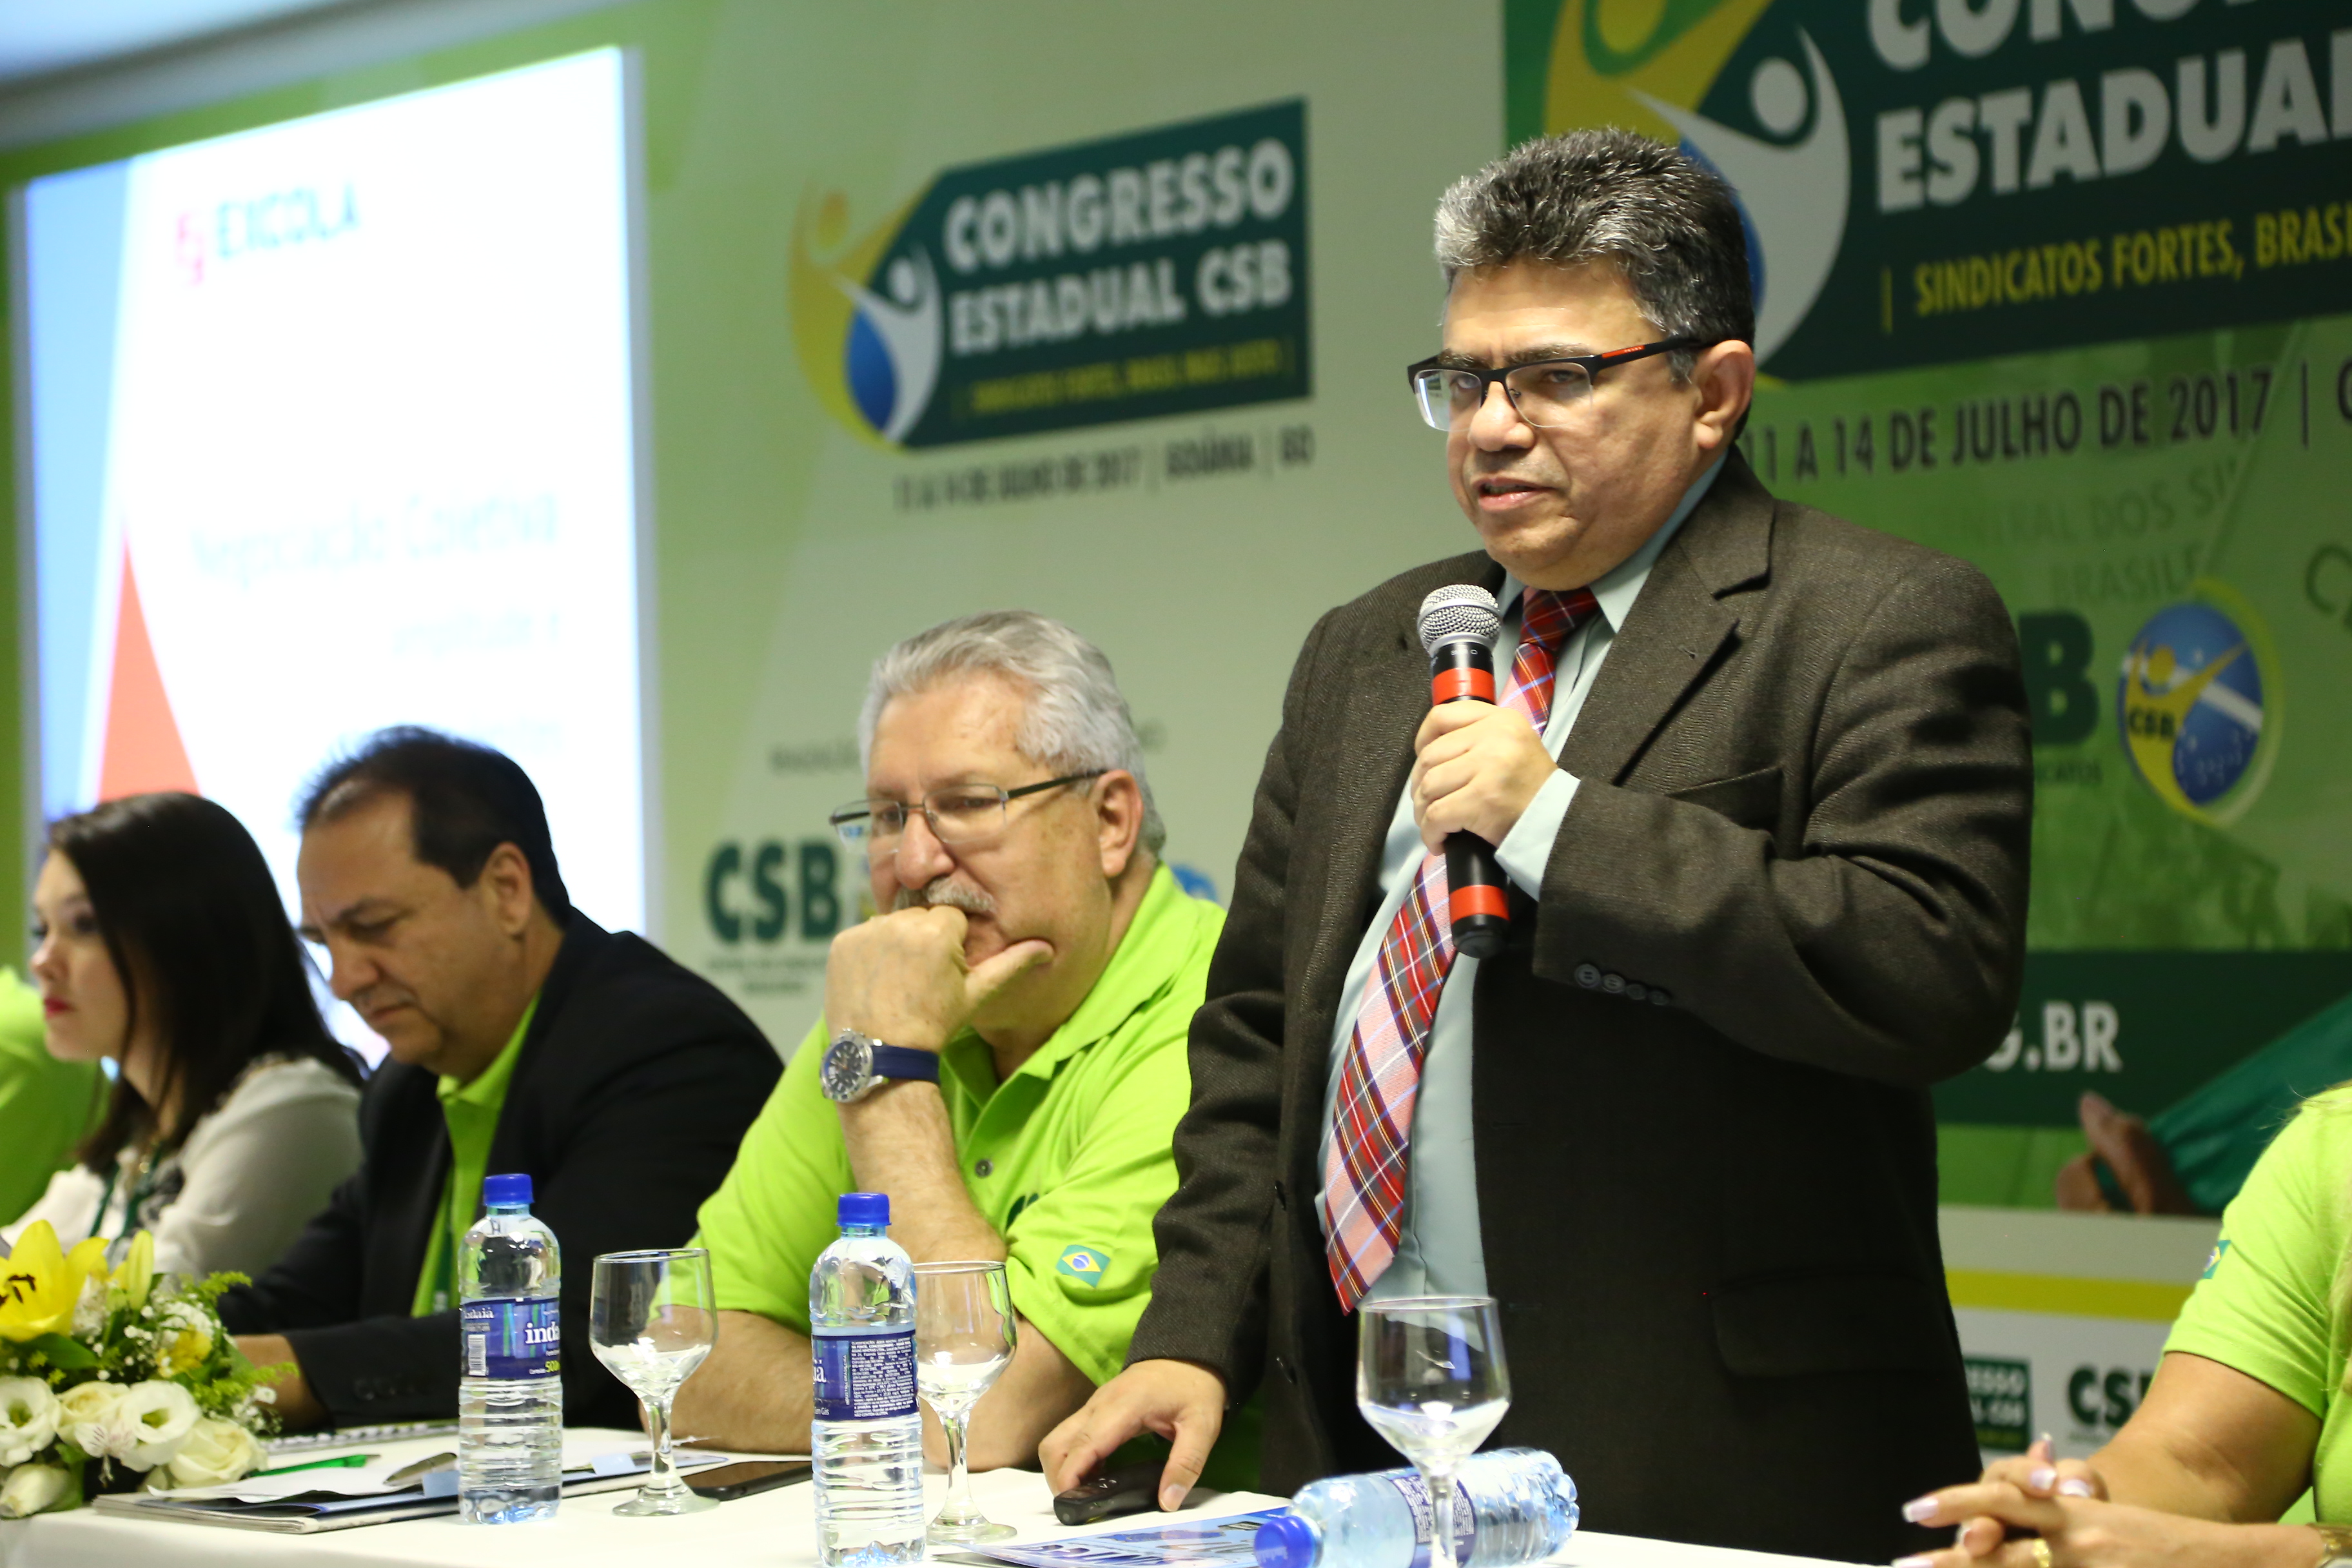 Palestra de Francisco Gérson Marques– Congresso Estadual CSB Goiás – 12 de julho | 2017